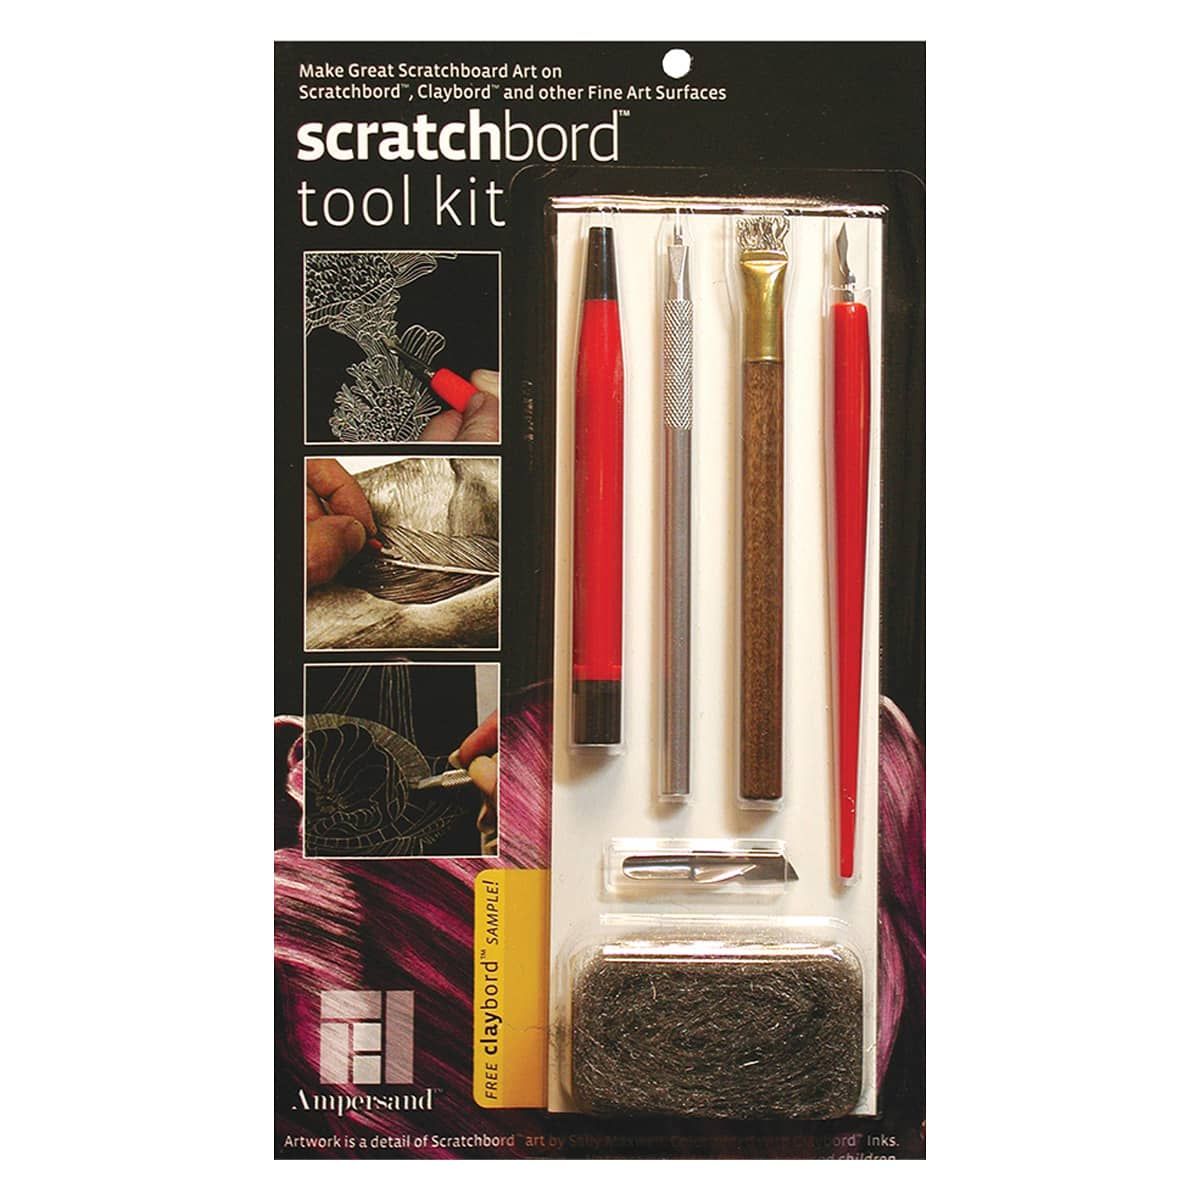 Ampersand Scratchbord Tool Kit, Complete Kit